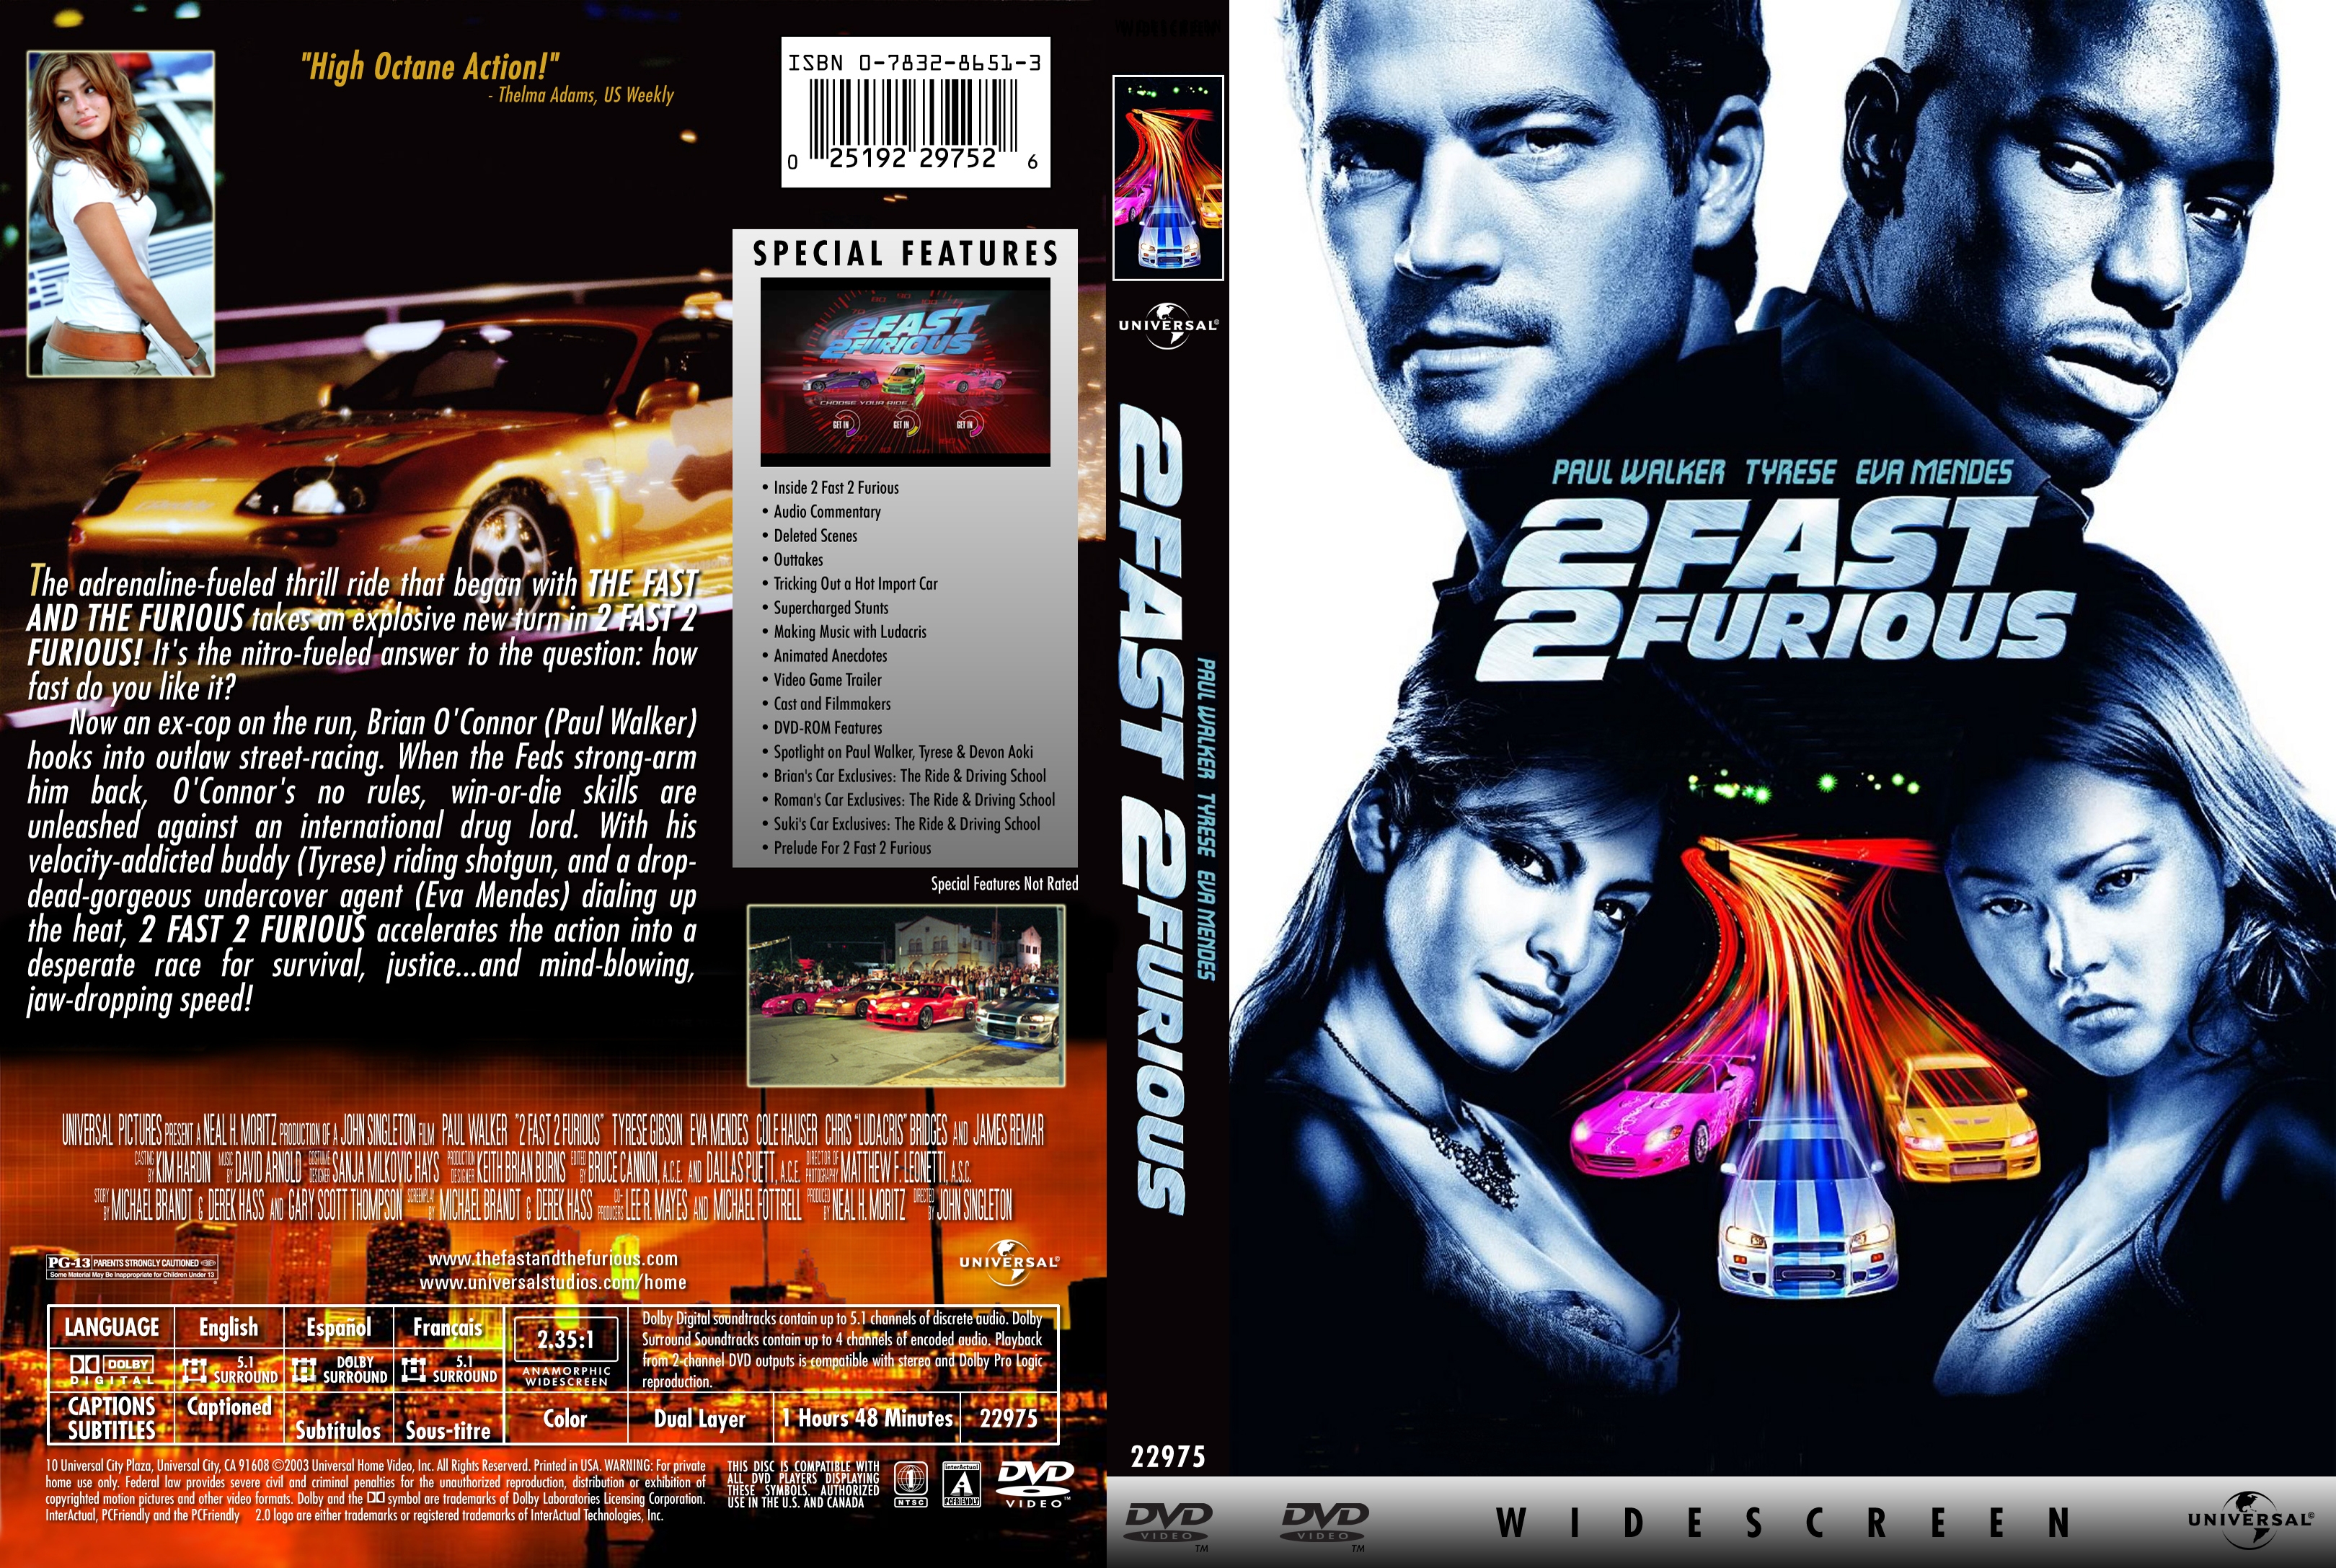 Second faster. Fast Furious 1 Брайан. 2 Fast 2 Furious DVD Cover. 2 Fast 2 Furious 2003 DVD Cover. Кассета Форсаж 2 DVD.